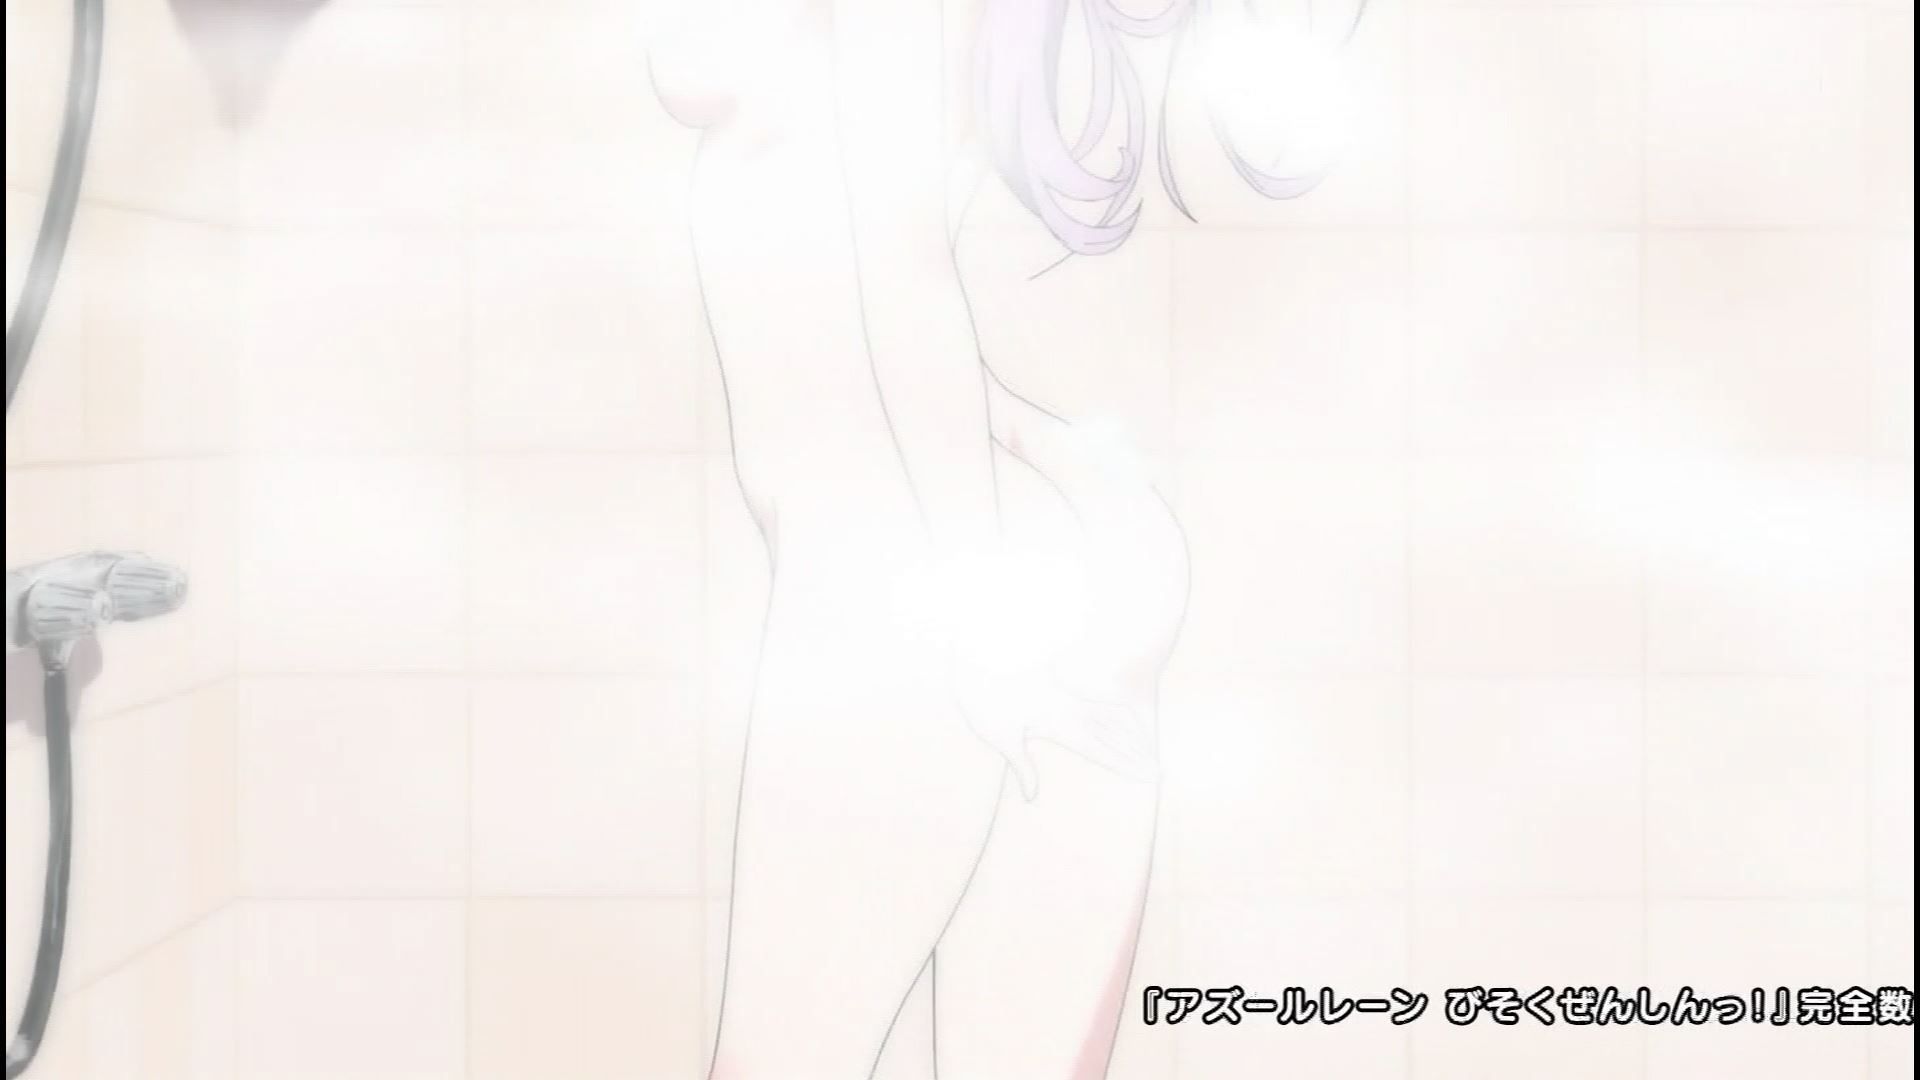 Anime "Azur Lane, 2010! Erotic shower scenes of girls in one story! 5